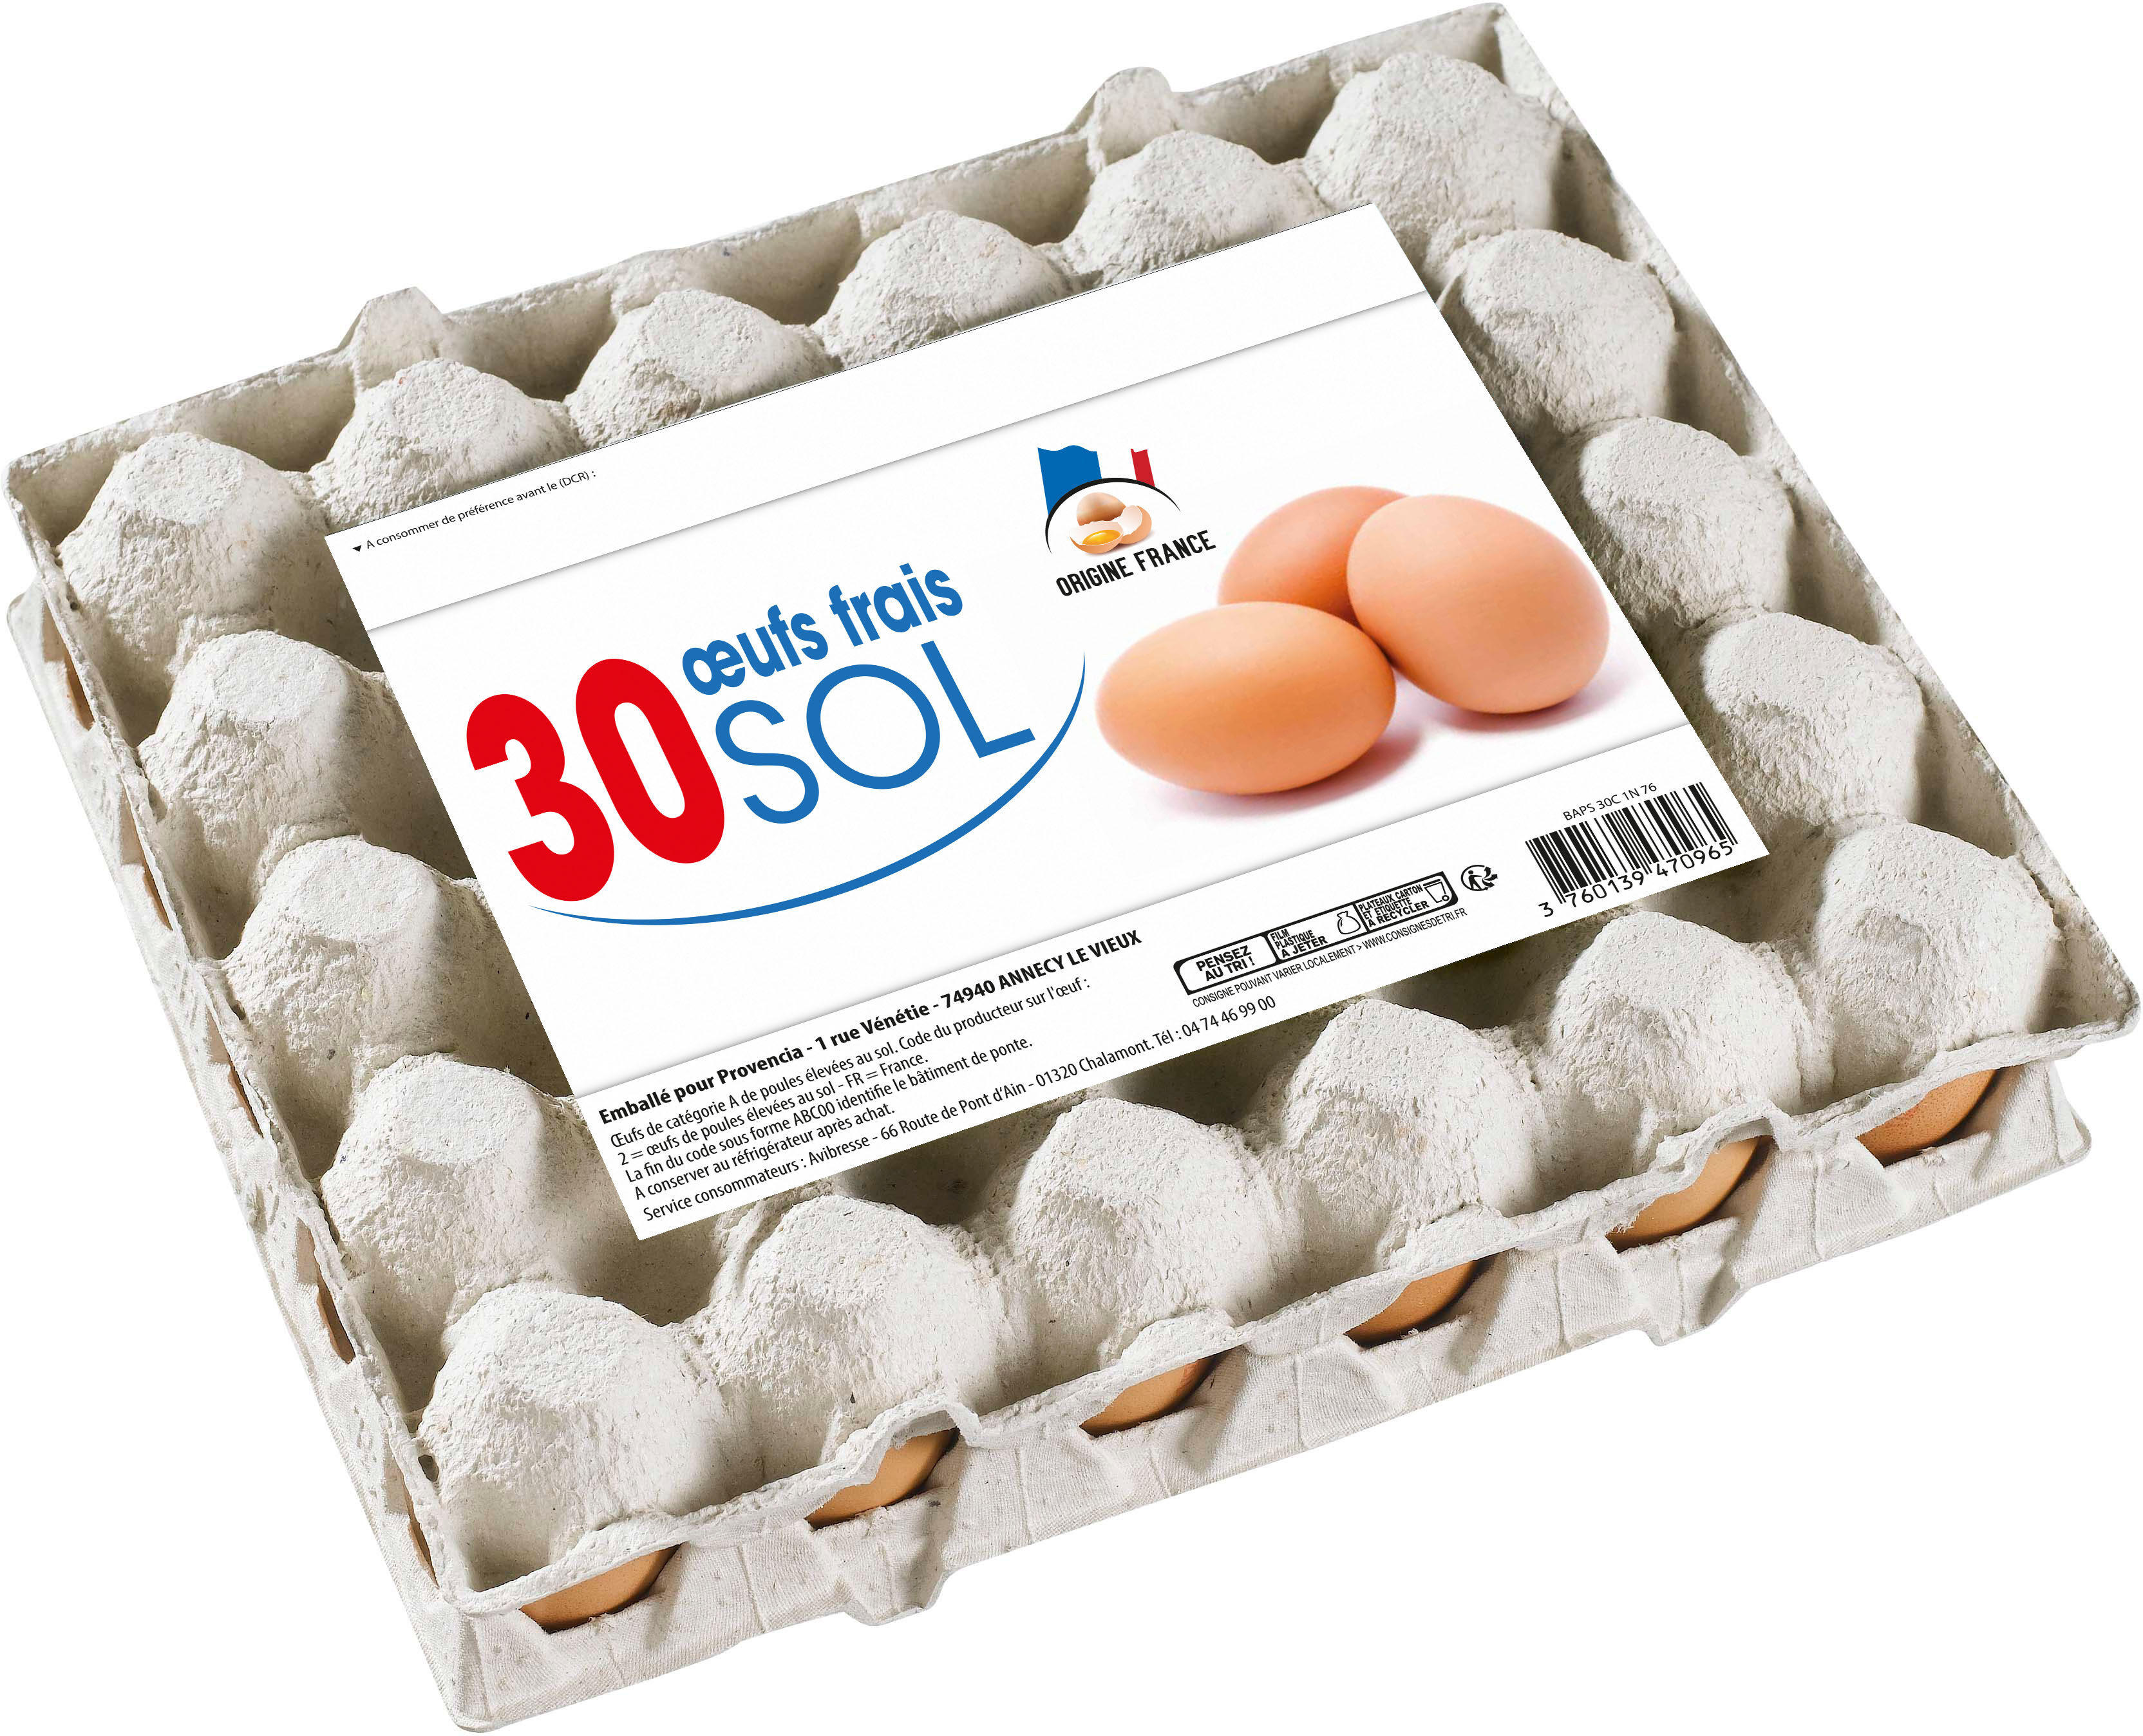 10 œuf frais sol - Product - fr